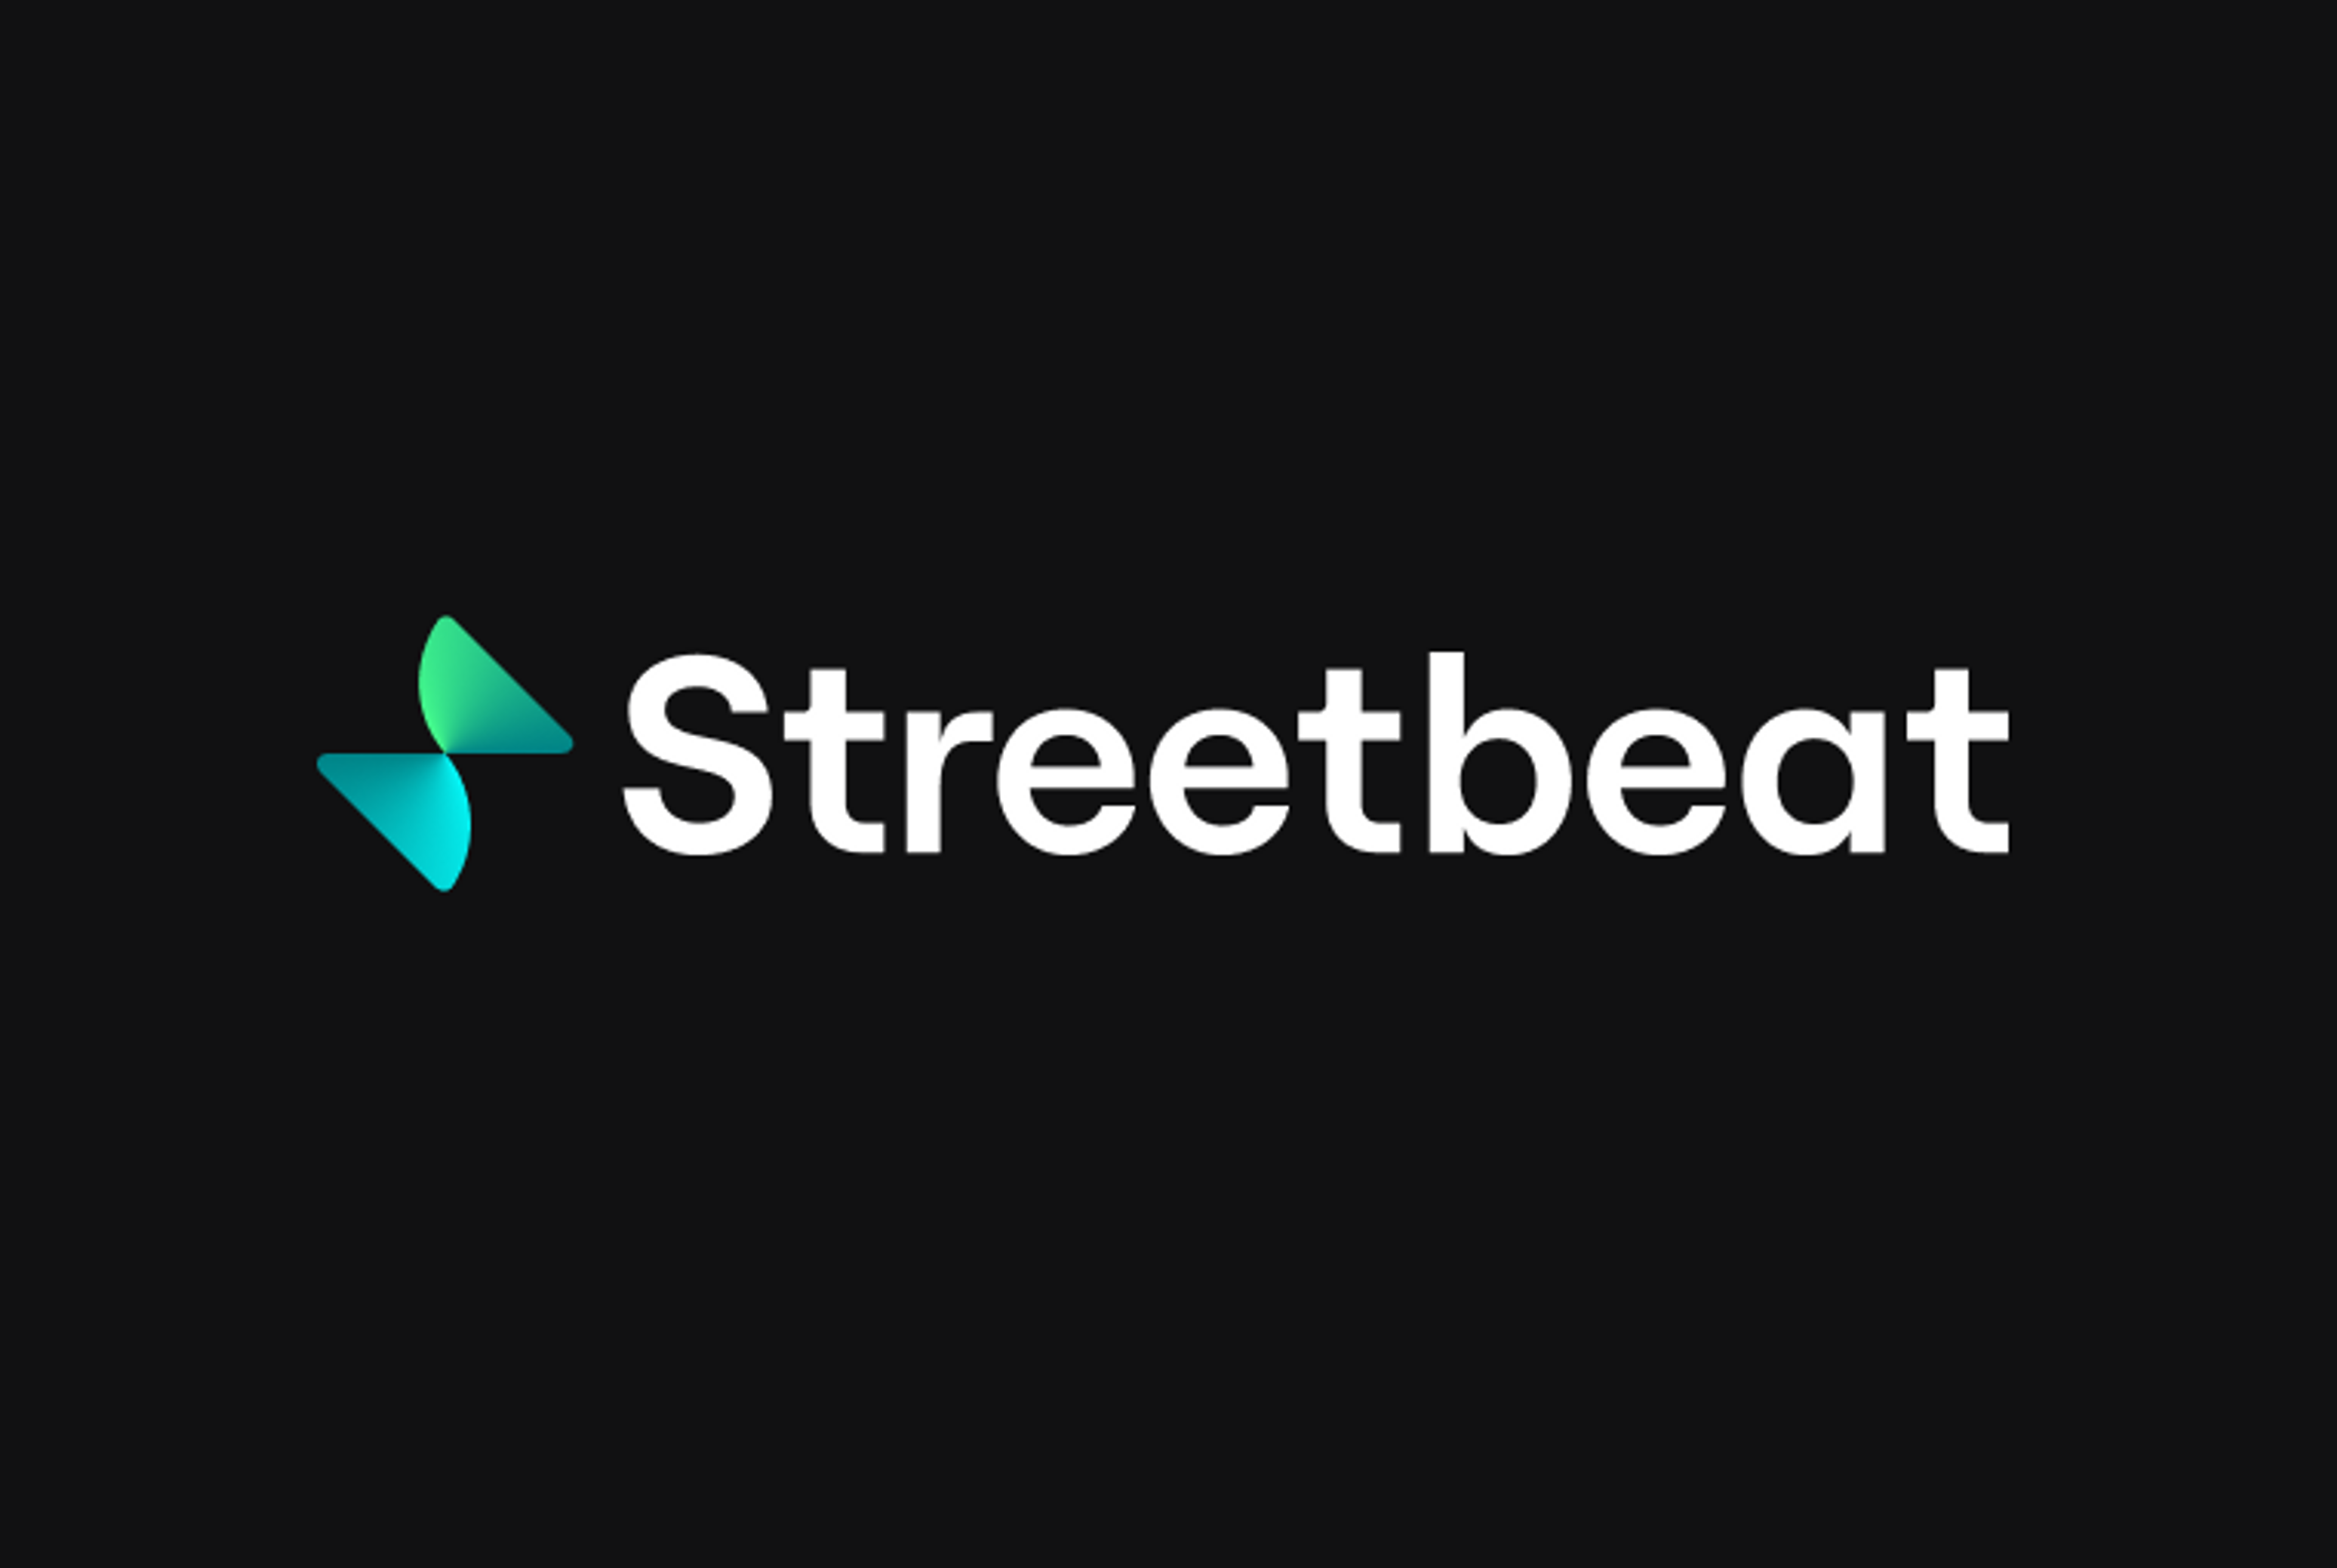 Streetbeat logo